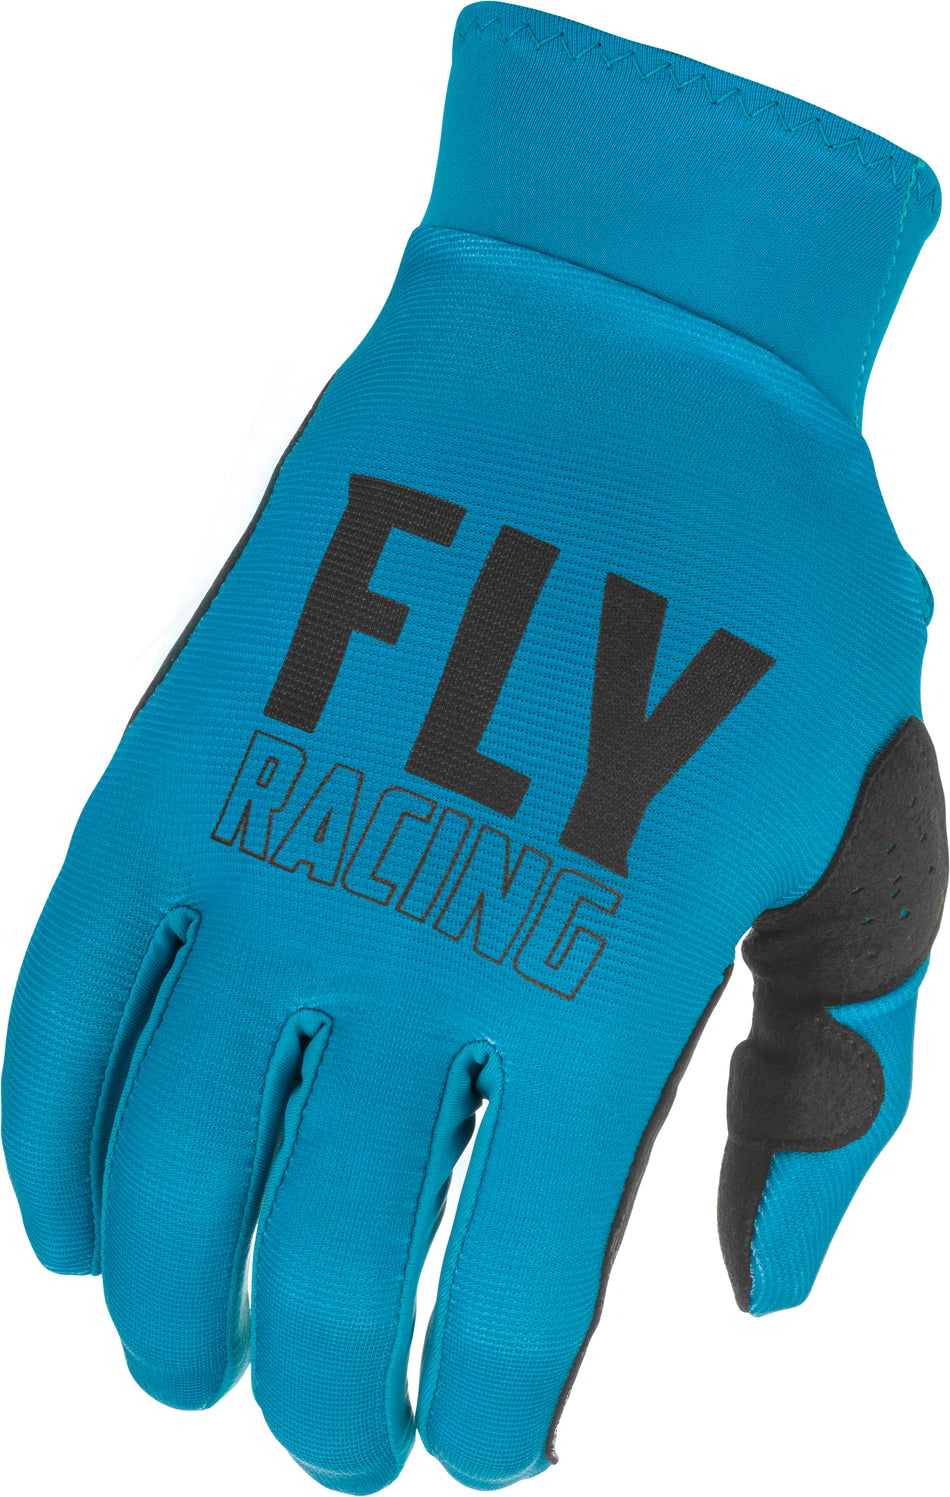 FLY RACING Pro Lite Gloves Blue/Black Sz 07 374-85107